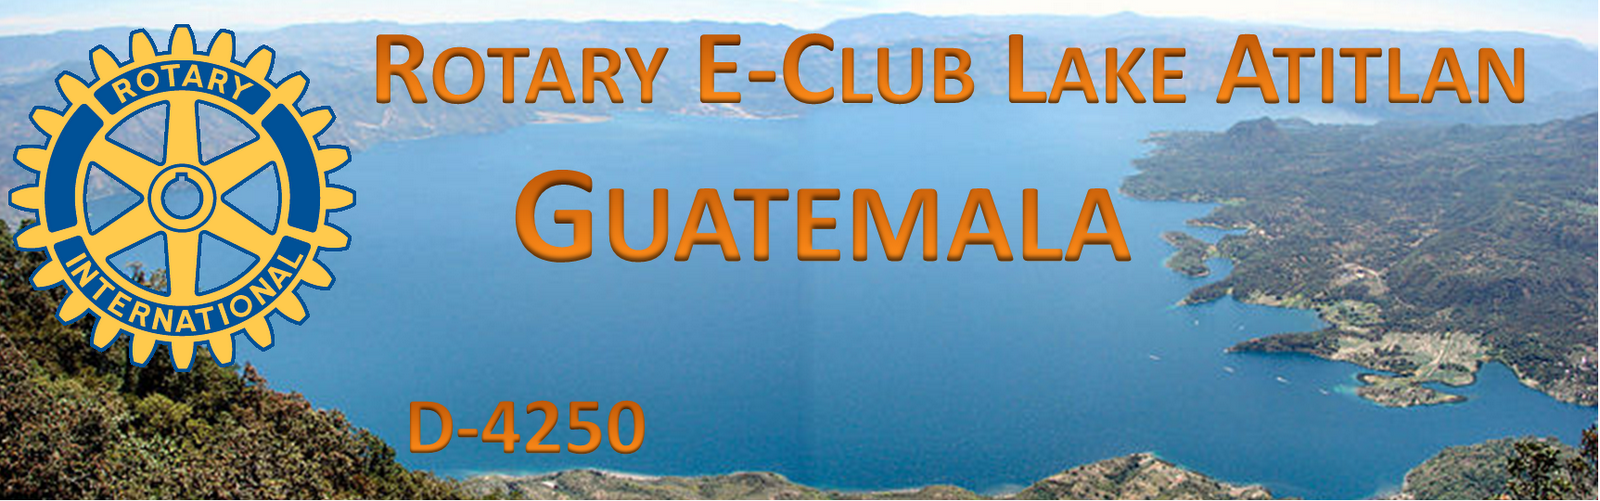 Meeting for Rotary E-Club Lake Atitlán D-4250